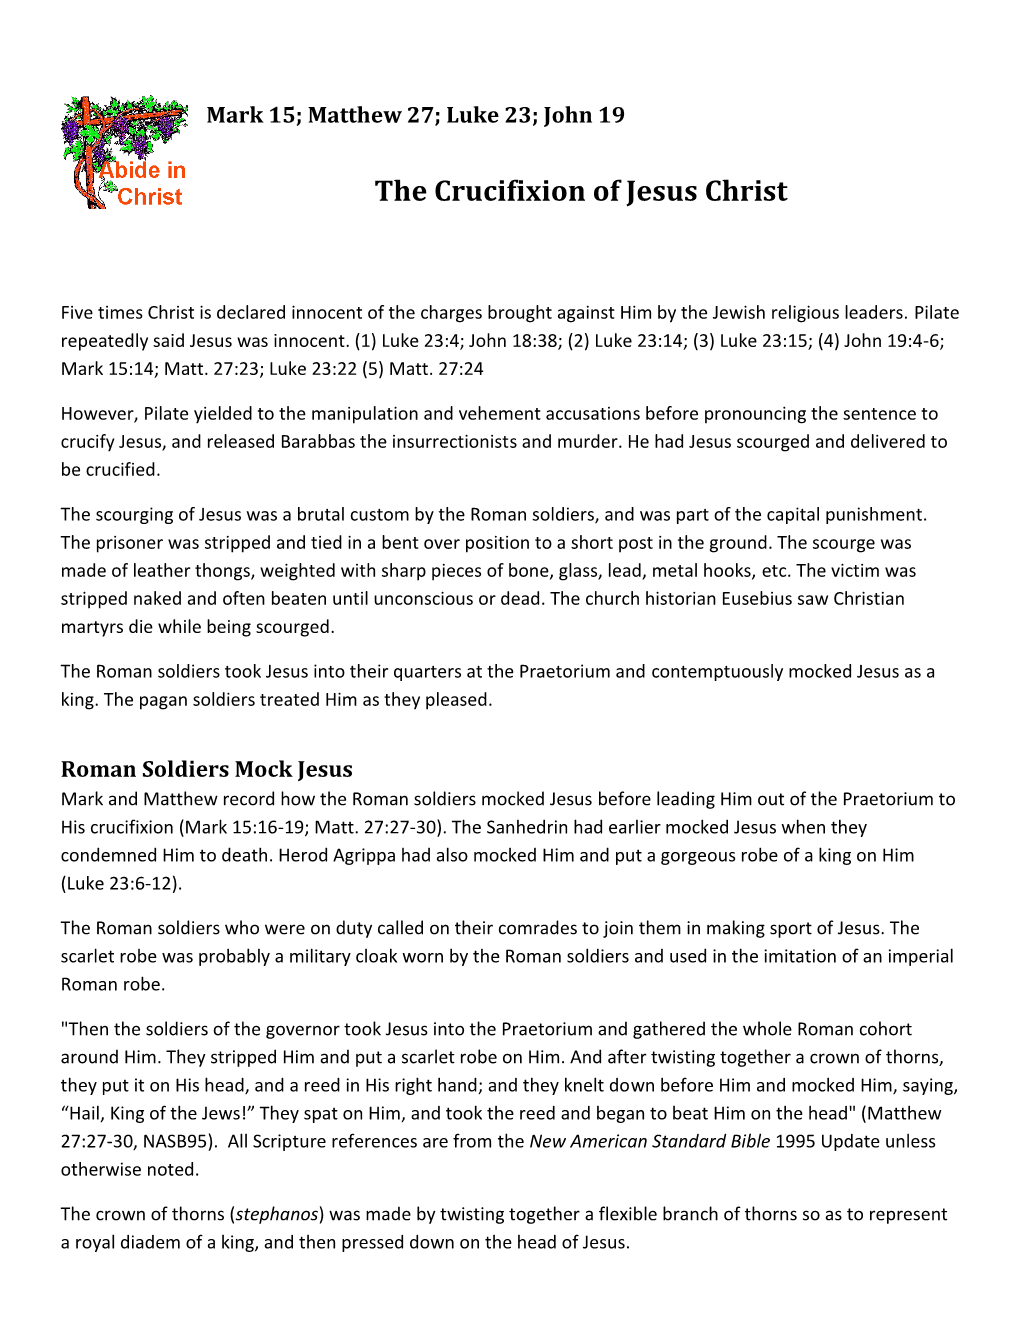 The Crucifixion Of Jesus Christ Docslib 4417